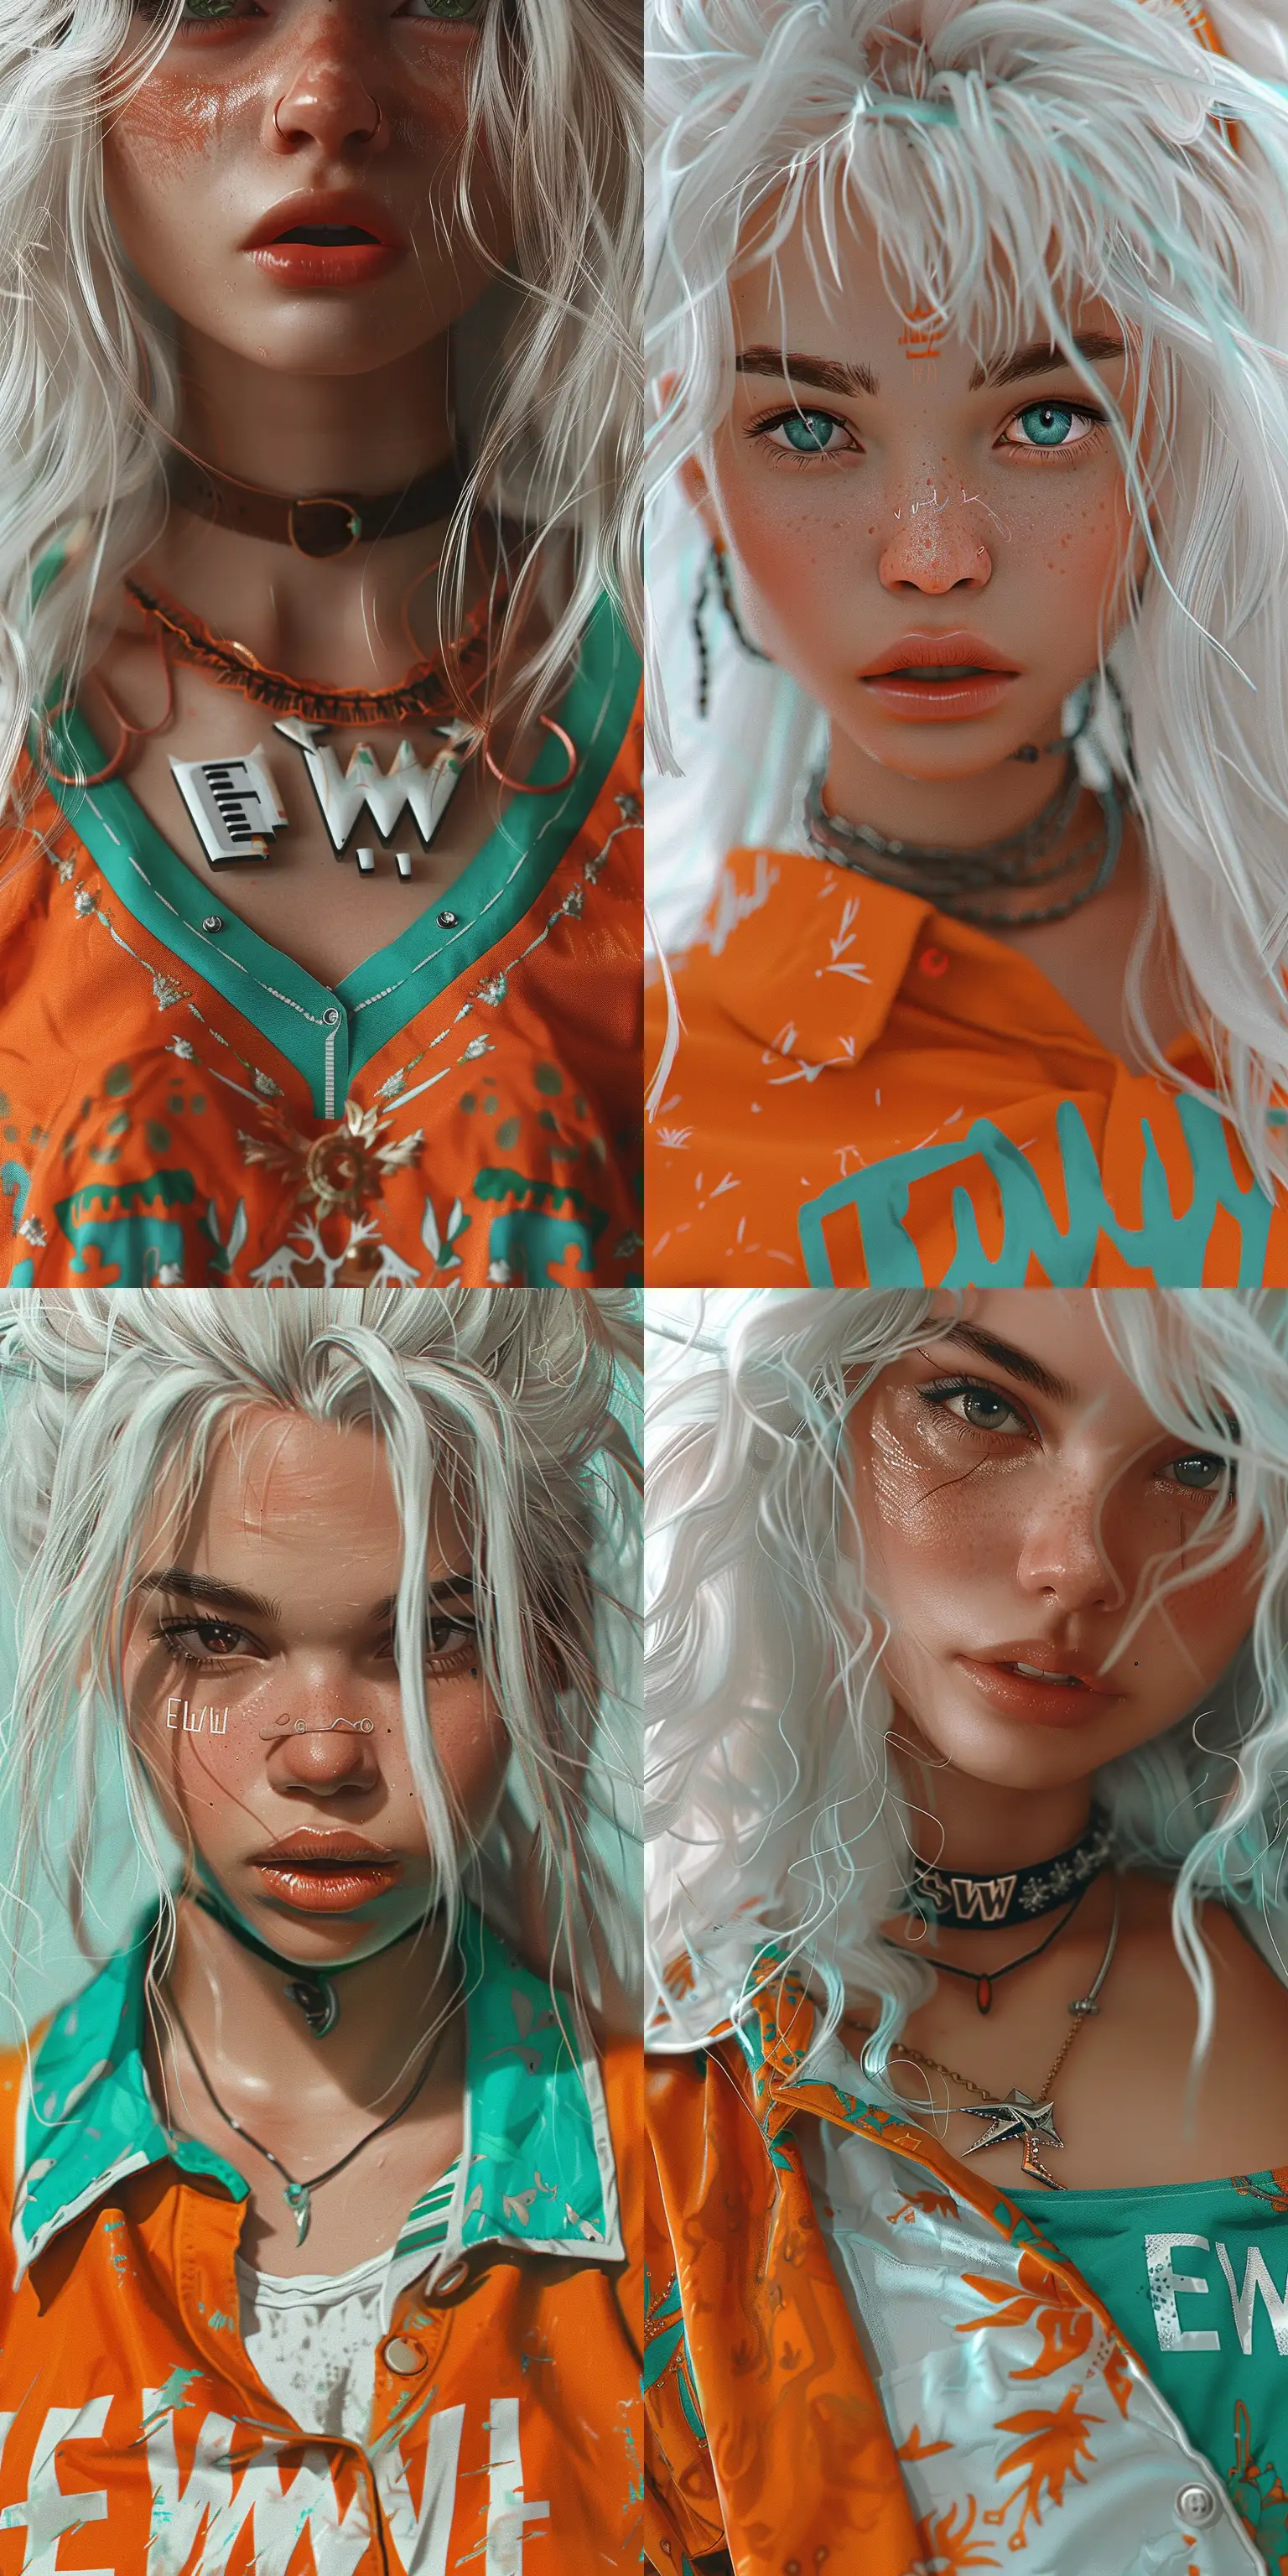 Ultra-Realistic-Bohemian-Girl-Portrait-with-EWW-Inscription-in-Nathalie-Shau-Style